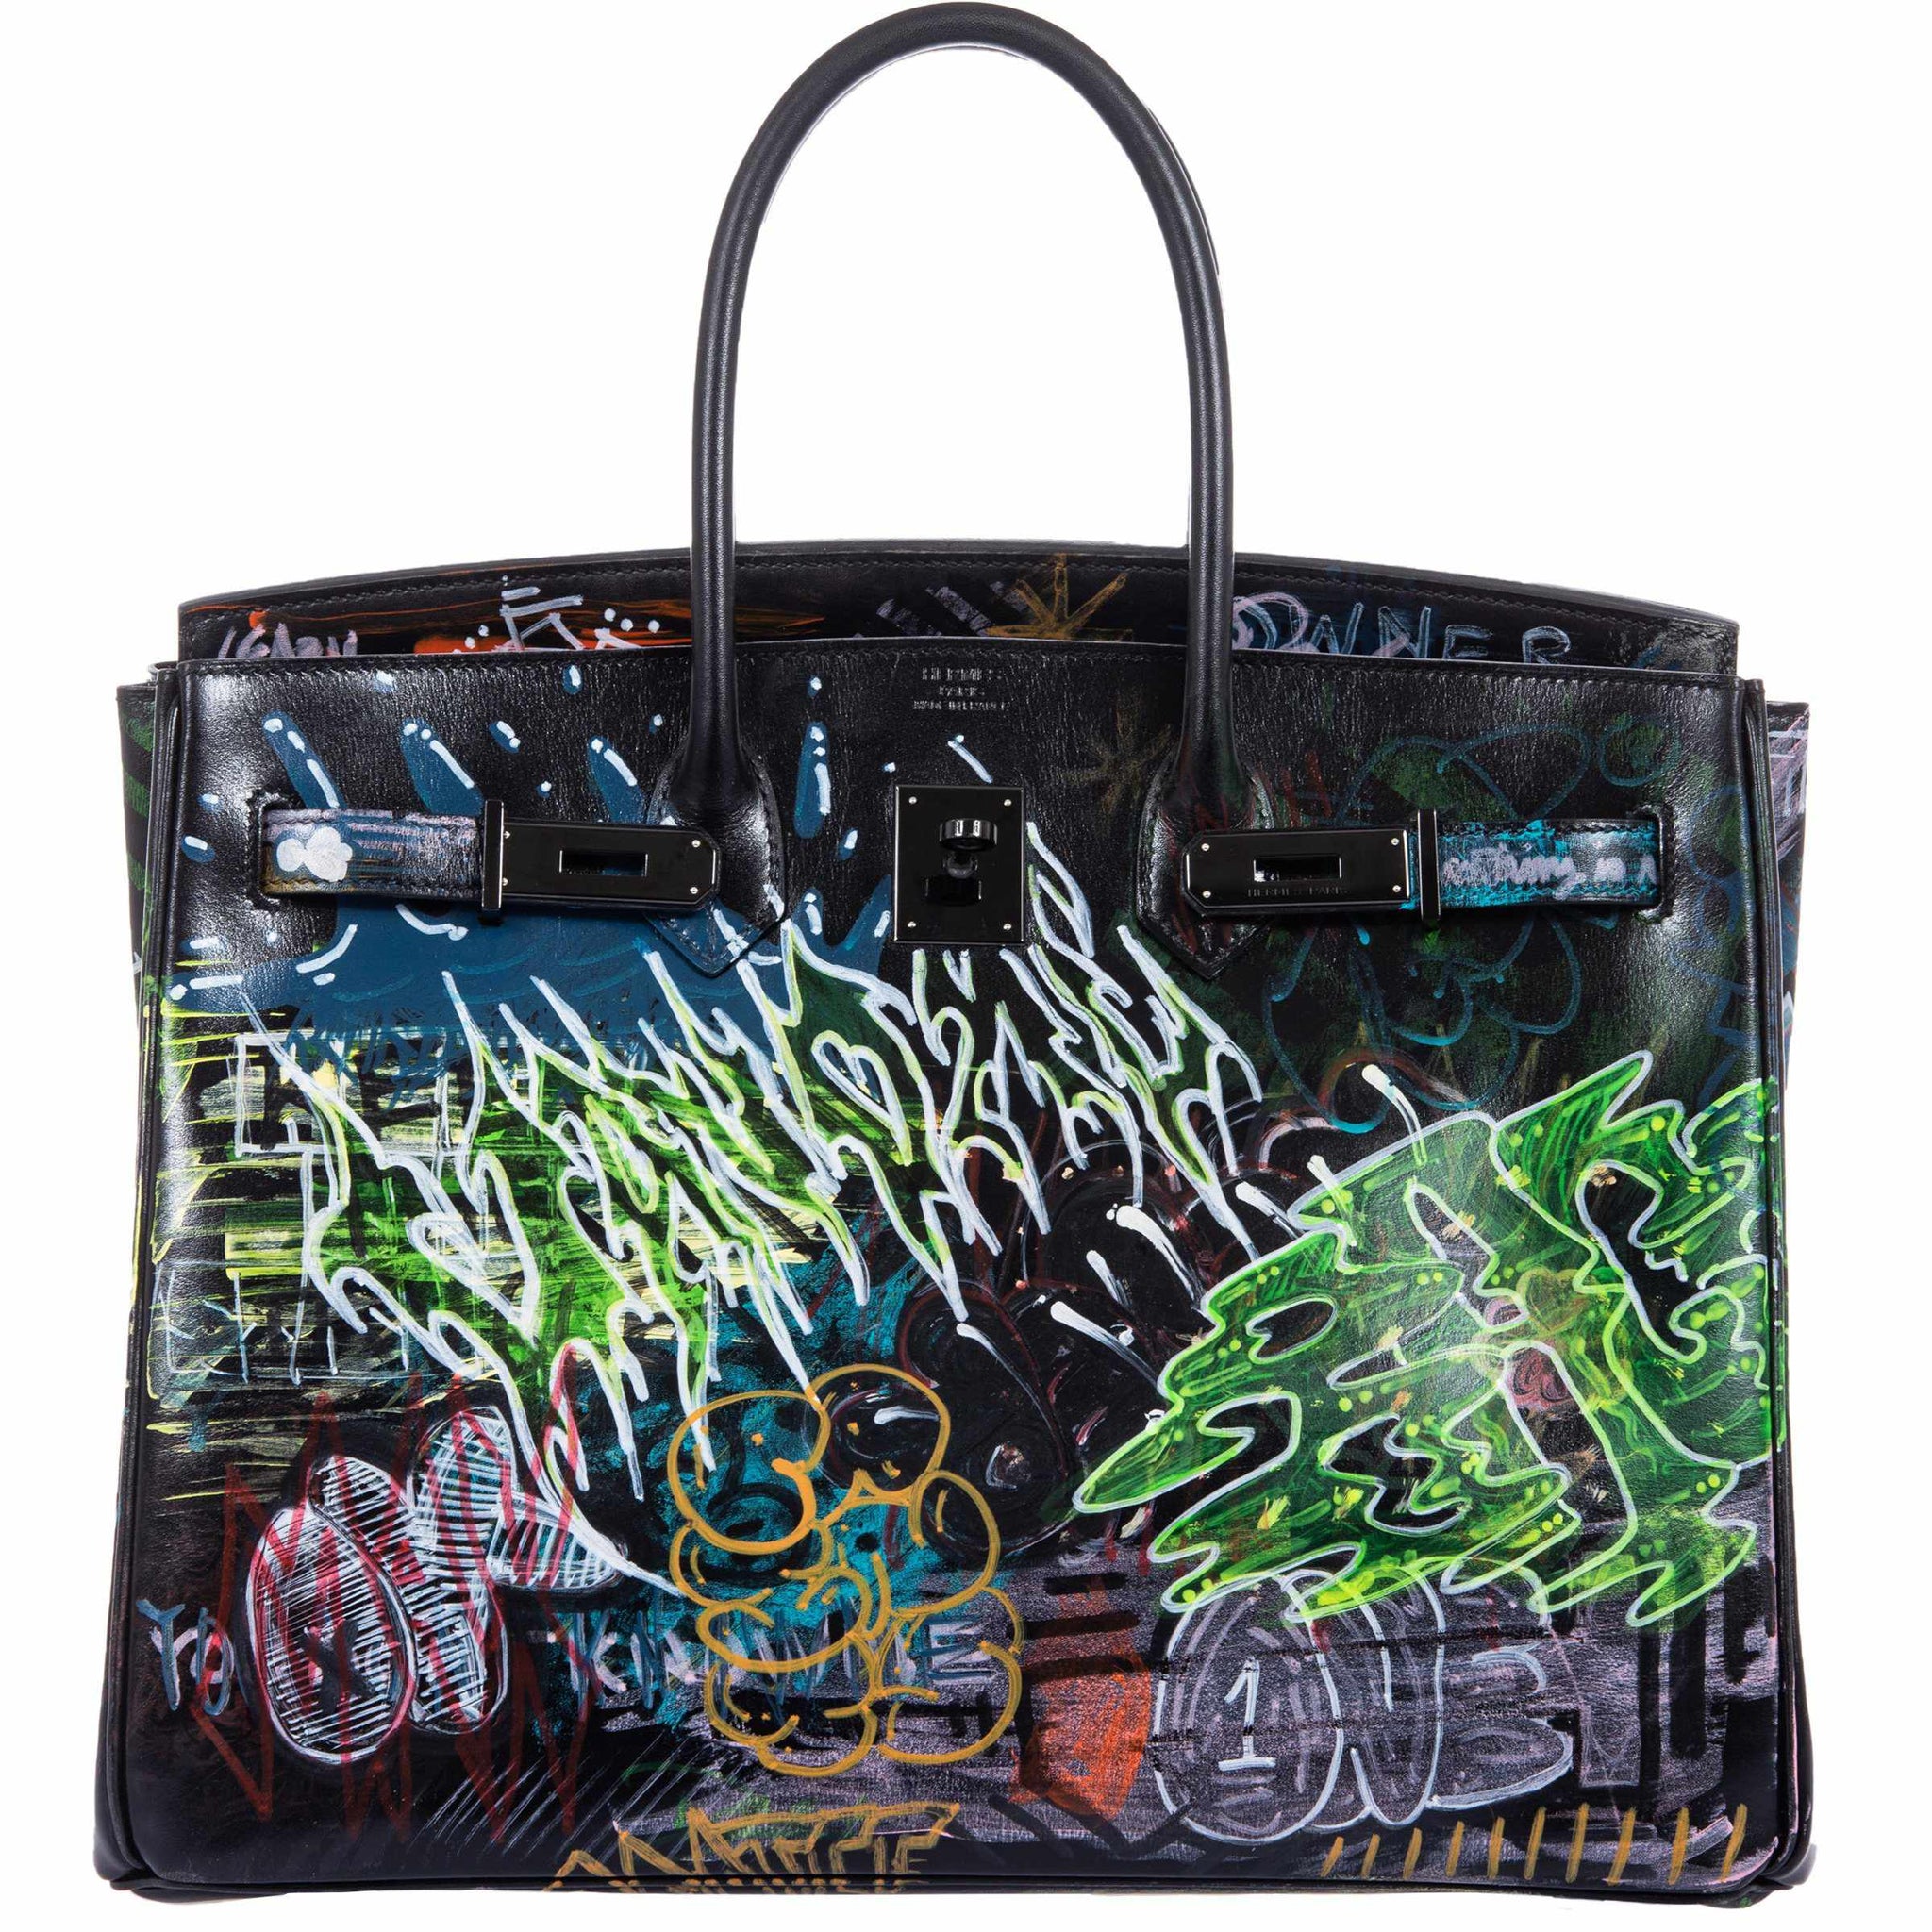 A Hermés Birkin bag with graffiti/writing on it: Yay  - Miss Lluviaconsol